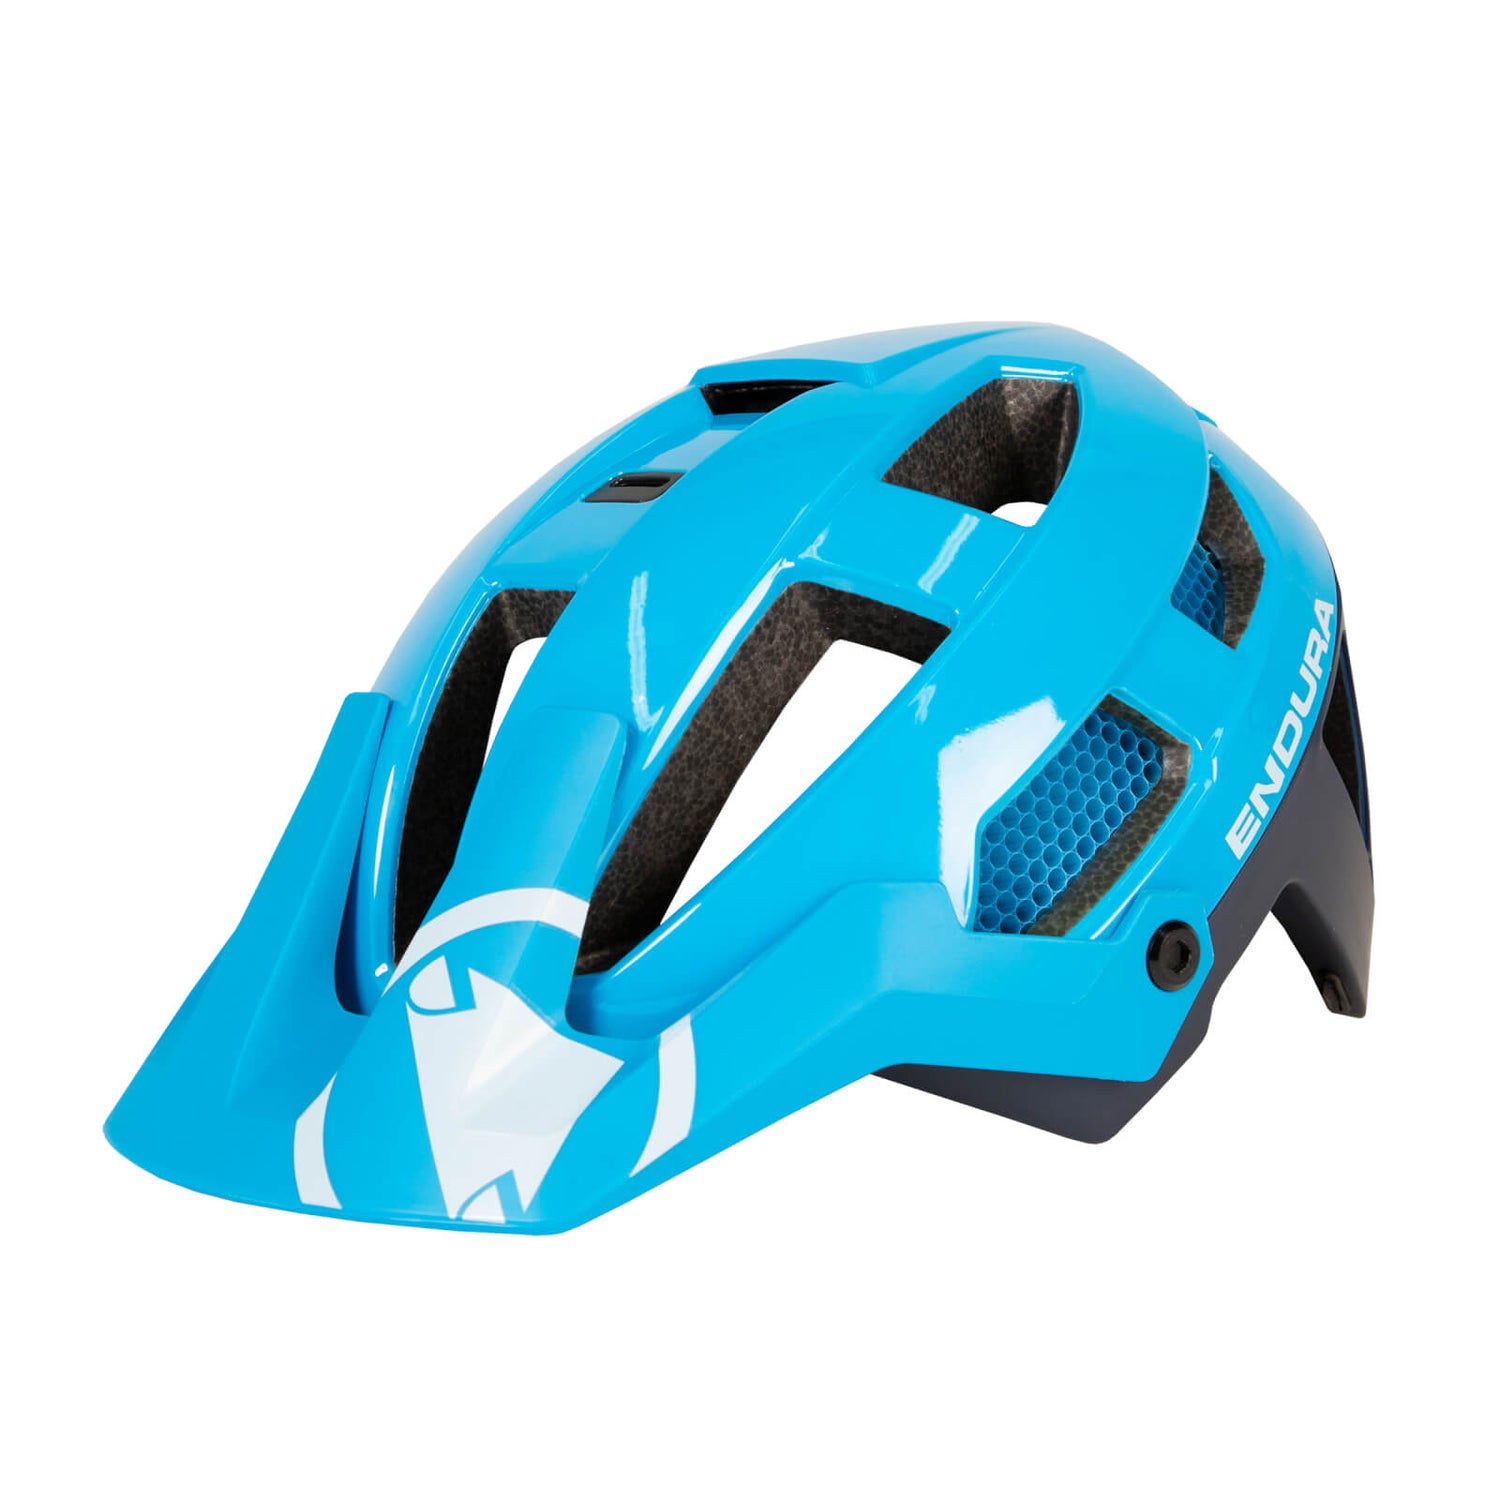 Men's SingleTrack Helmet - Electric Blue - S-M